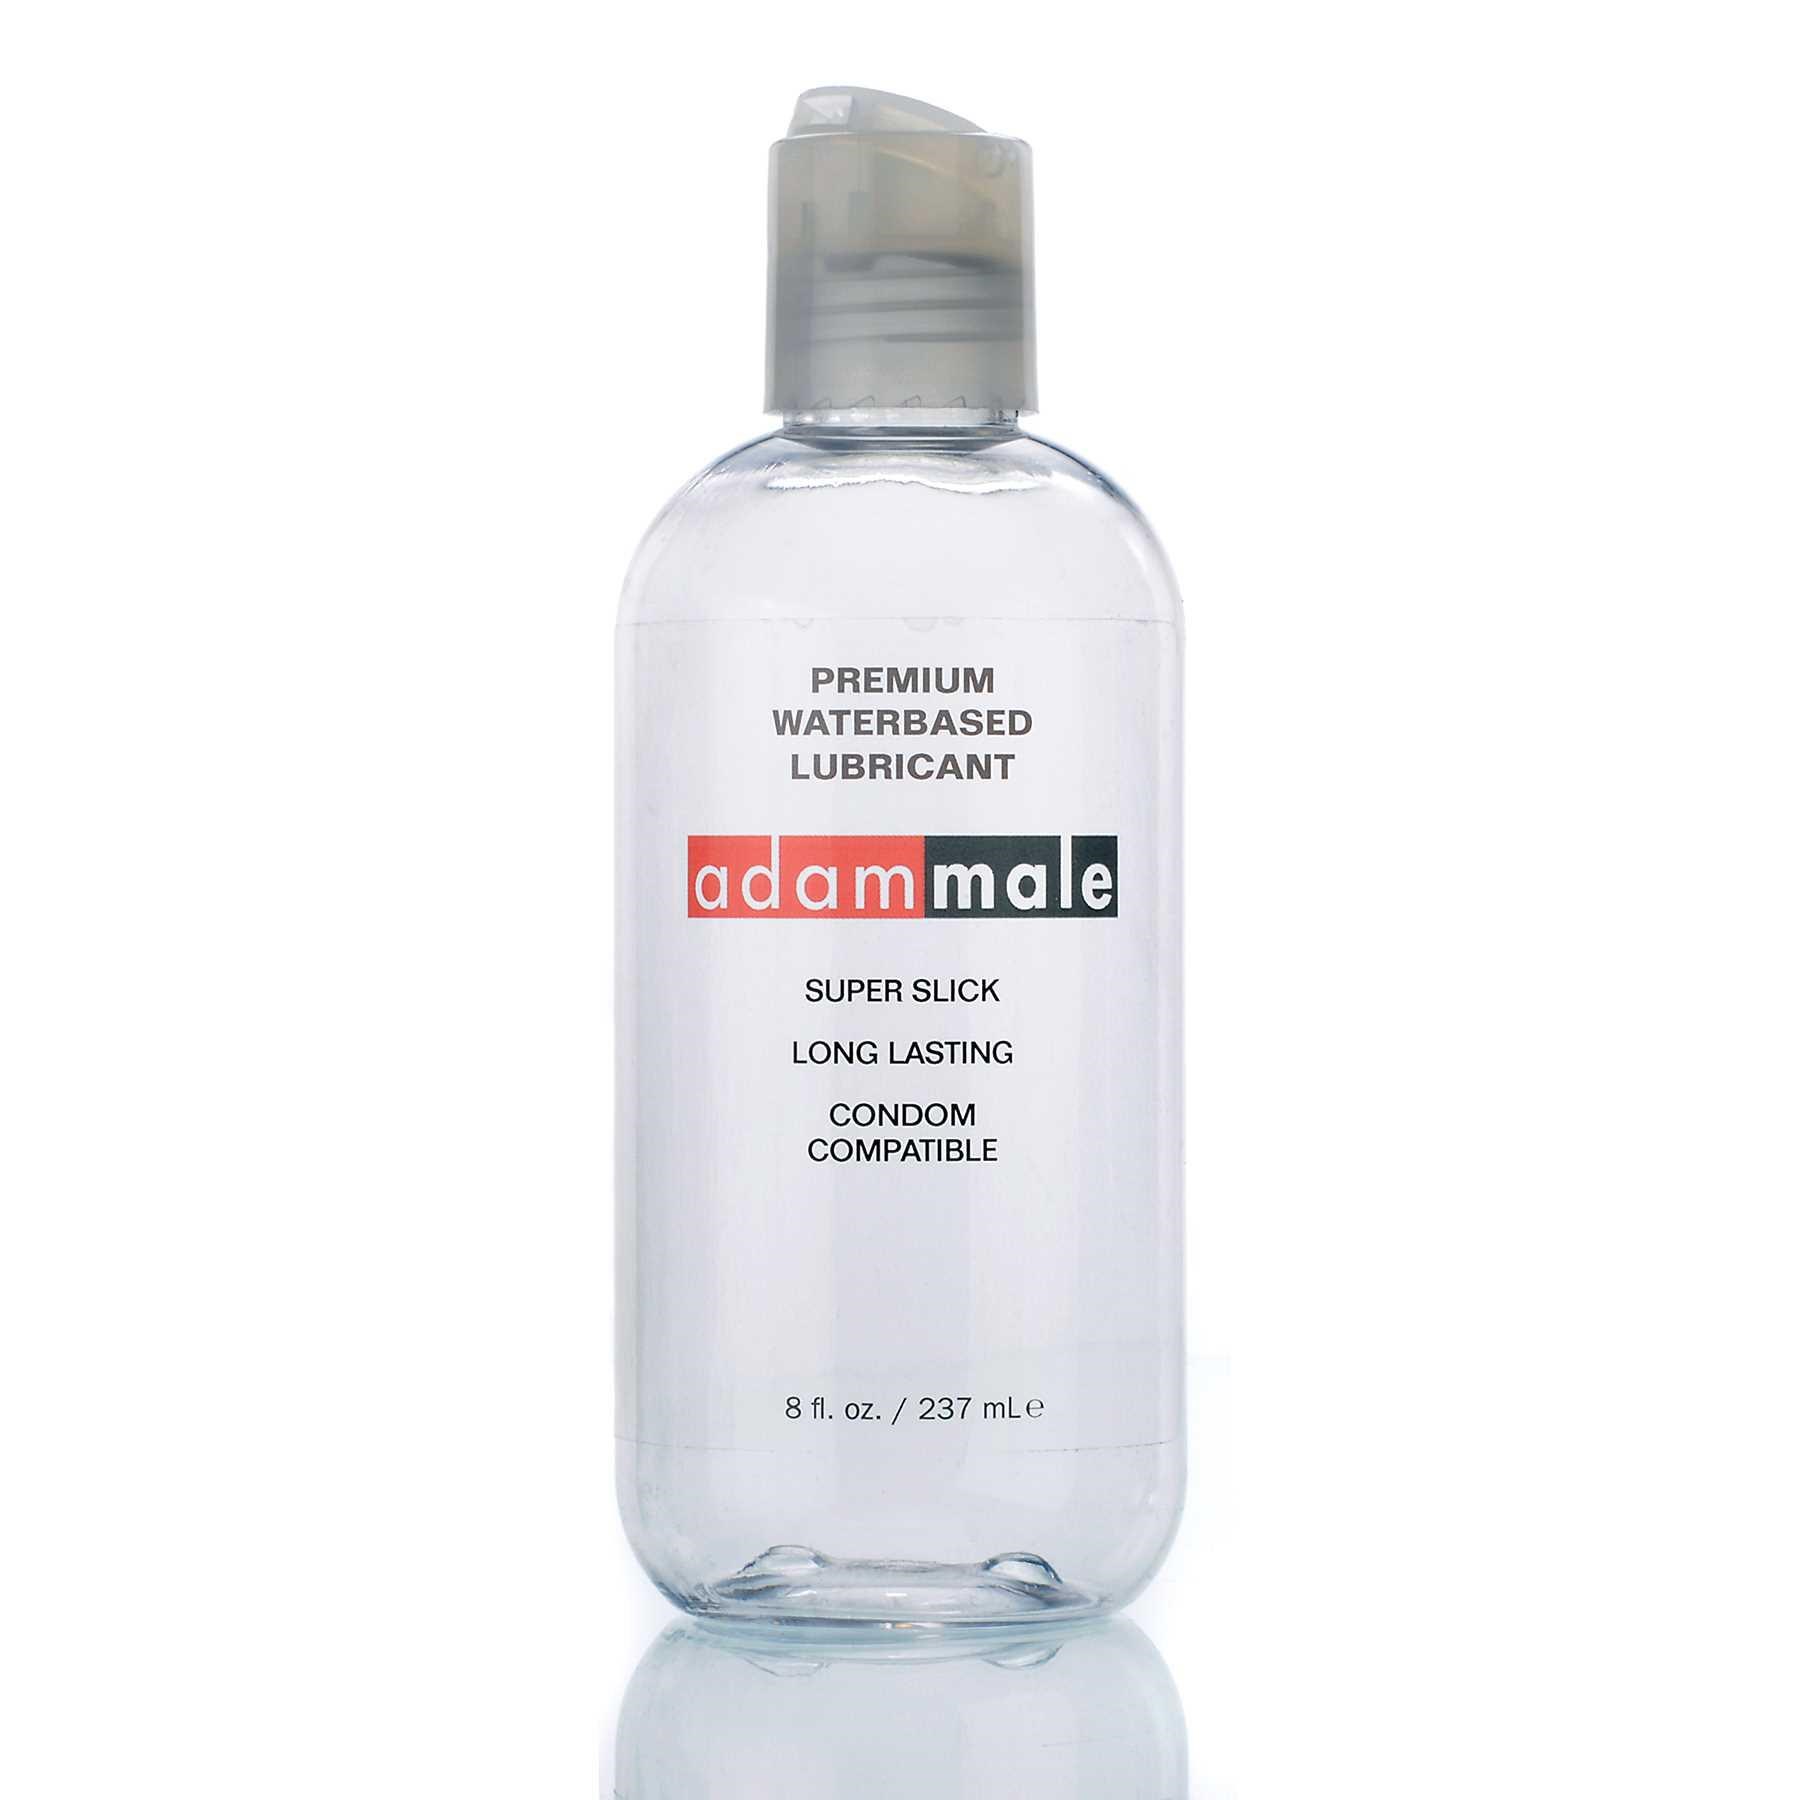 AdamMale water based lube